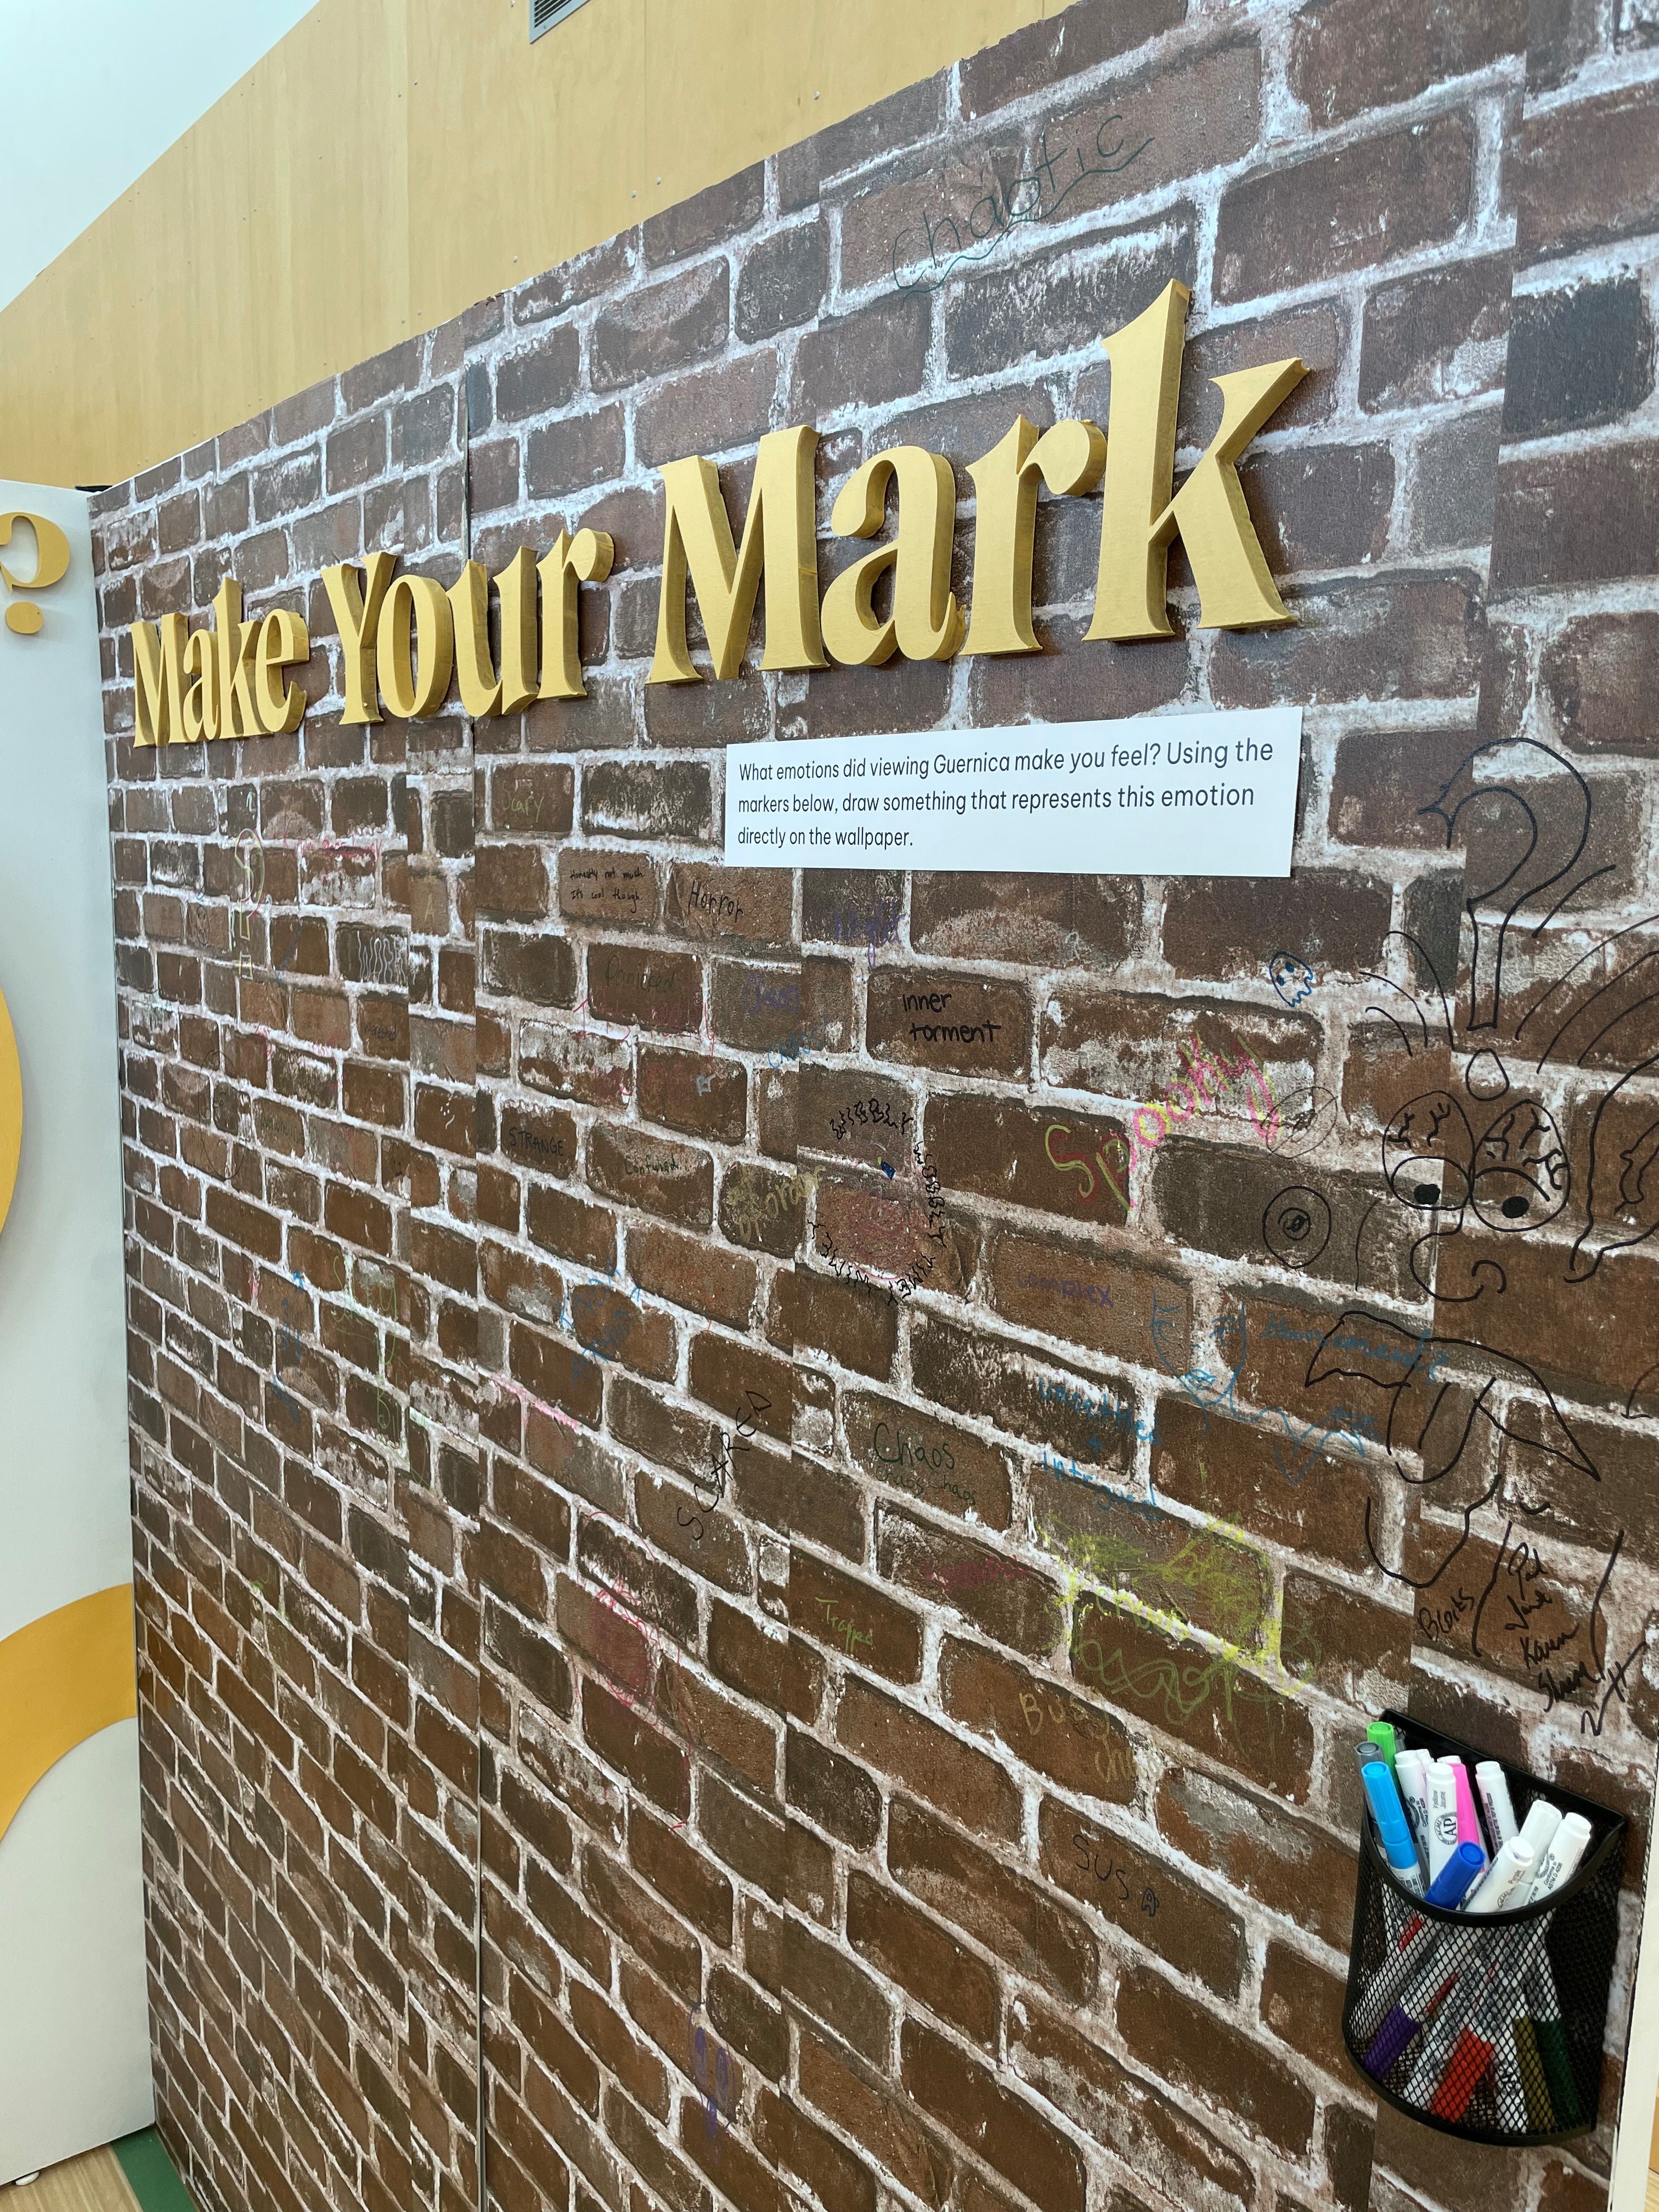 make your mark